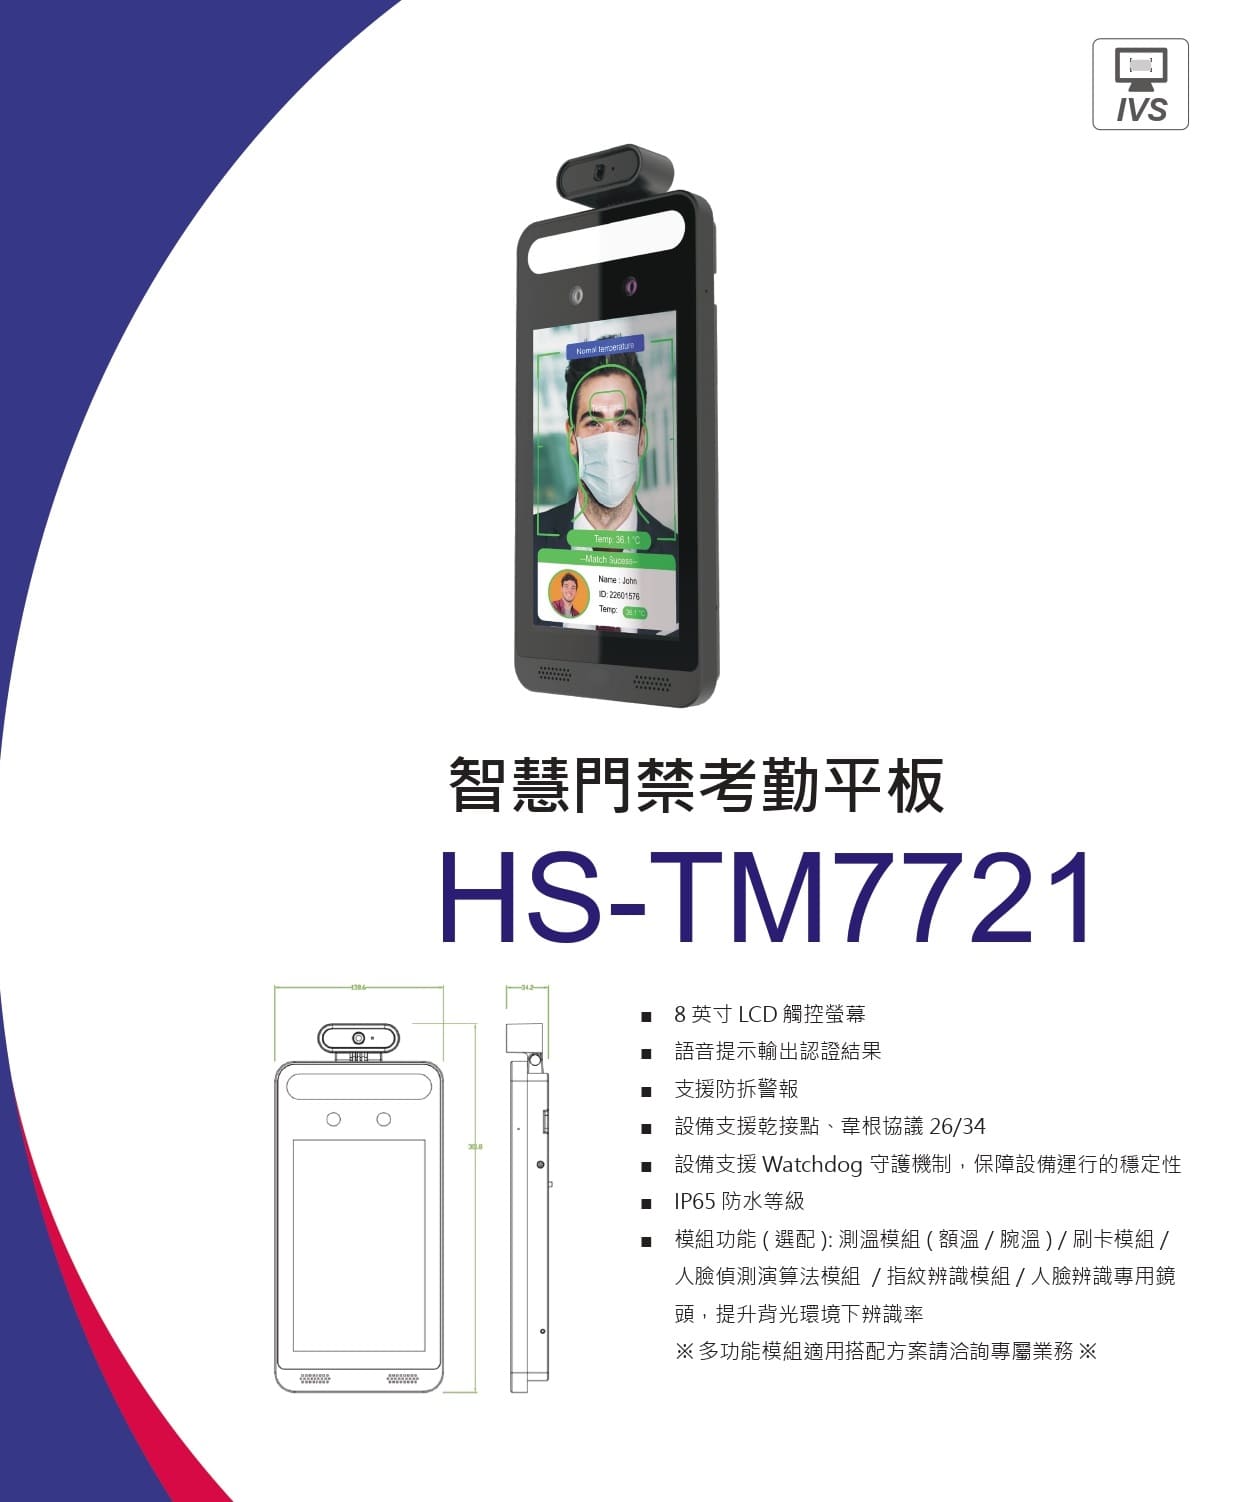 HS-TM7721 智慧人臉測溫考勤 人臉辨識溫度感測系統